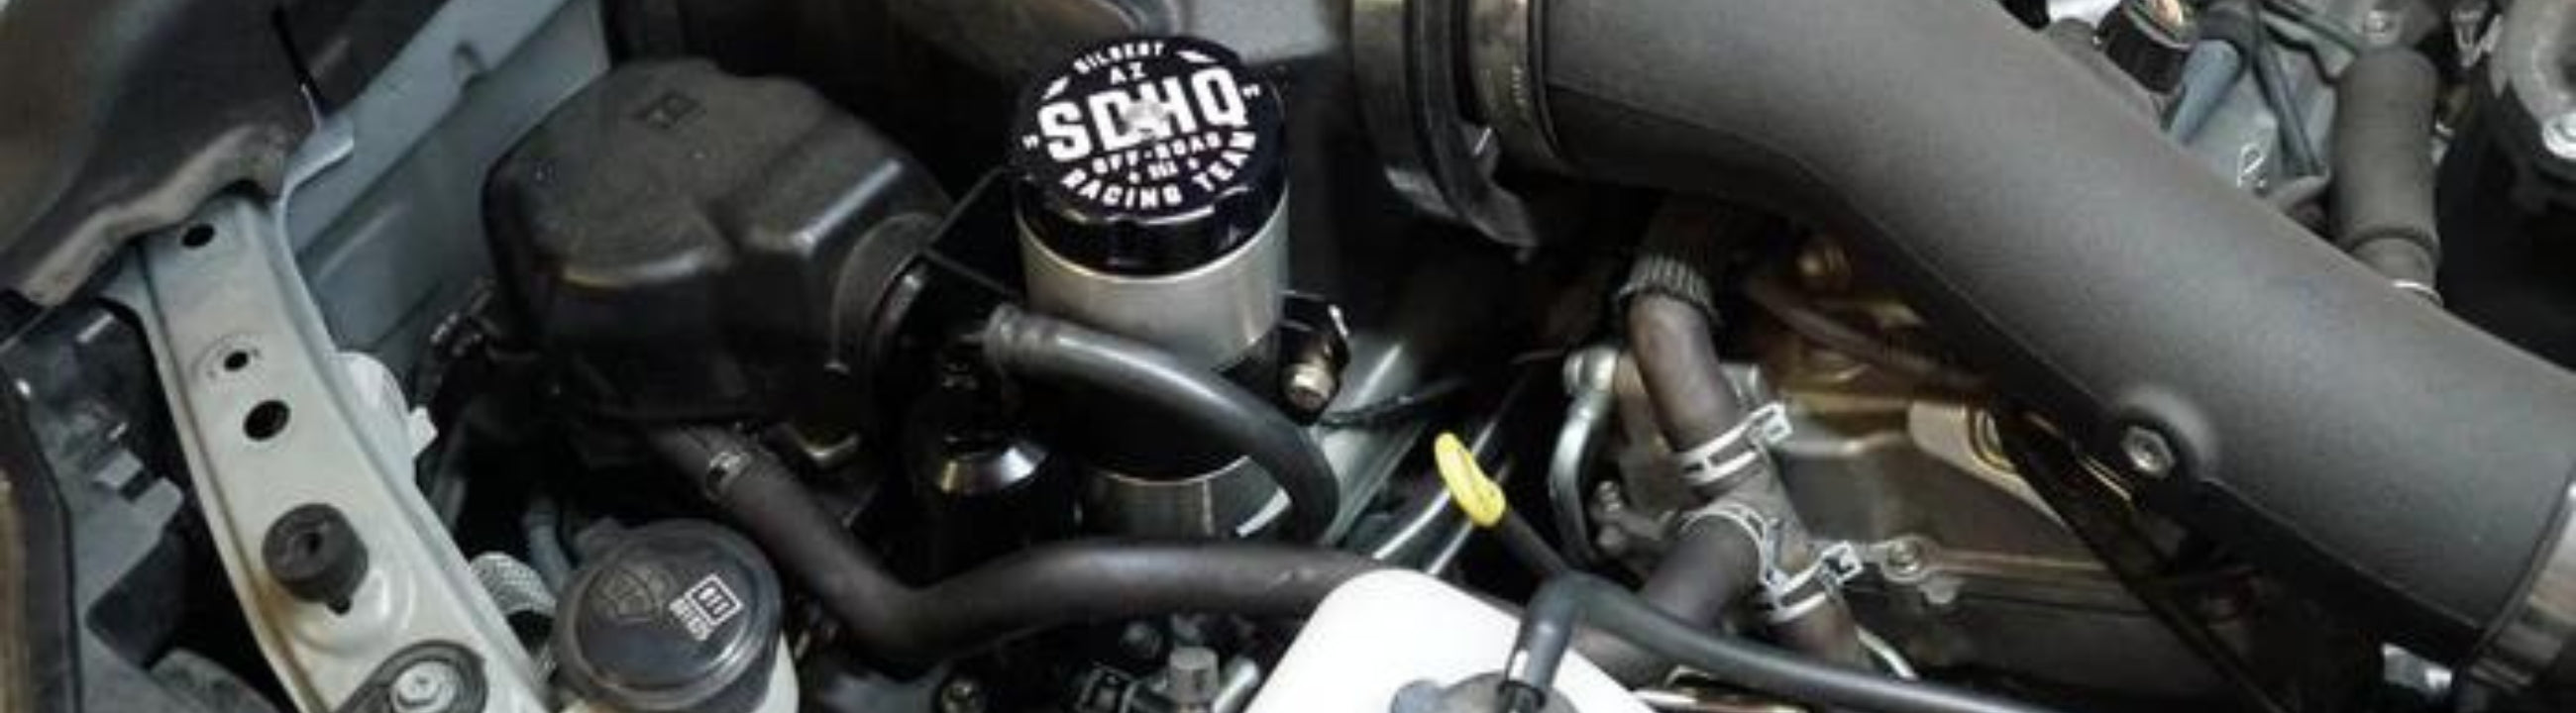 SDHQ Power Steering Reservoir Kits